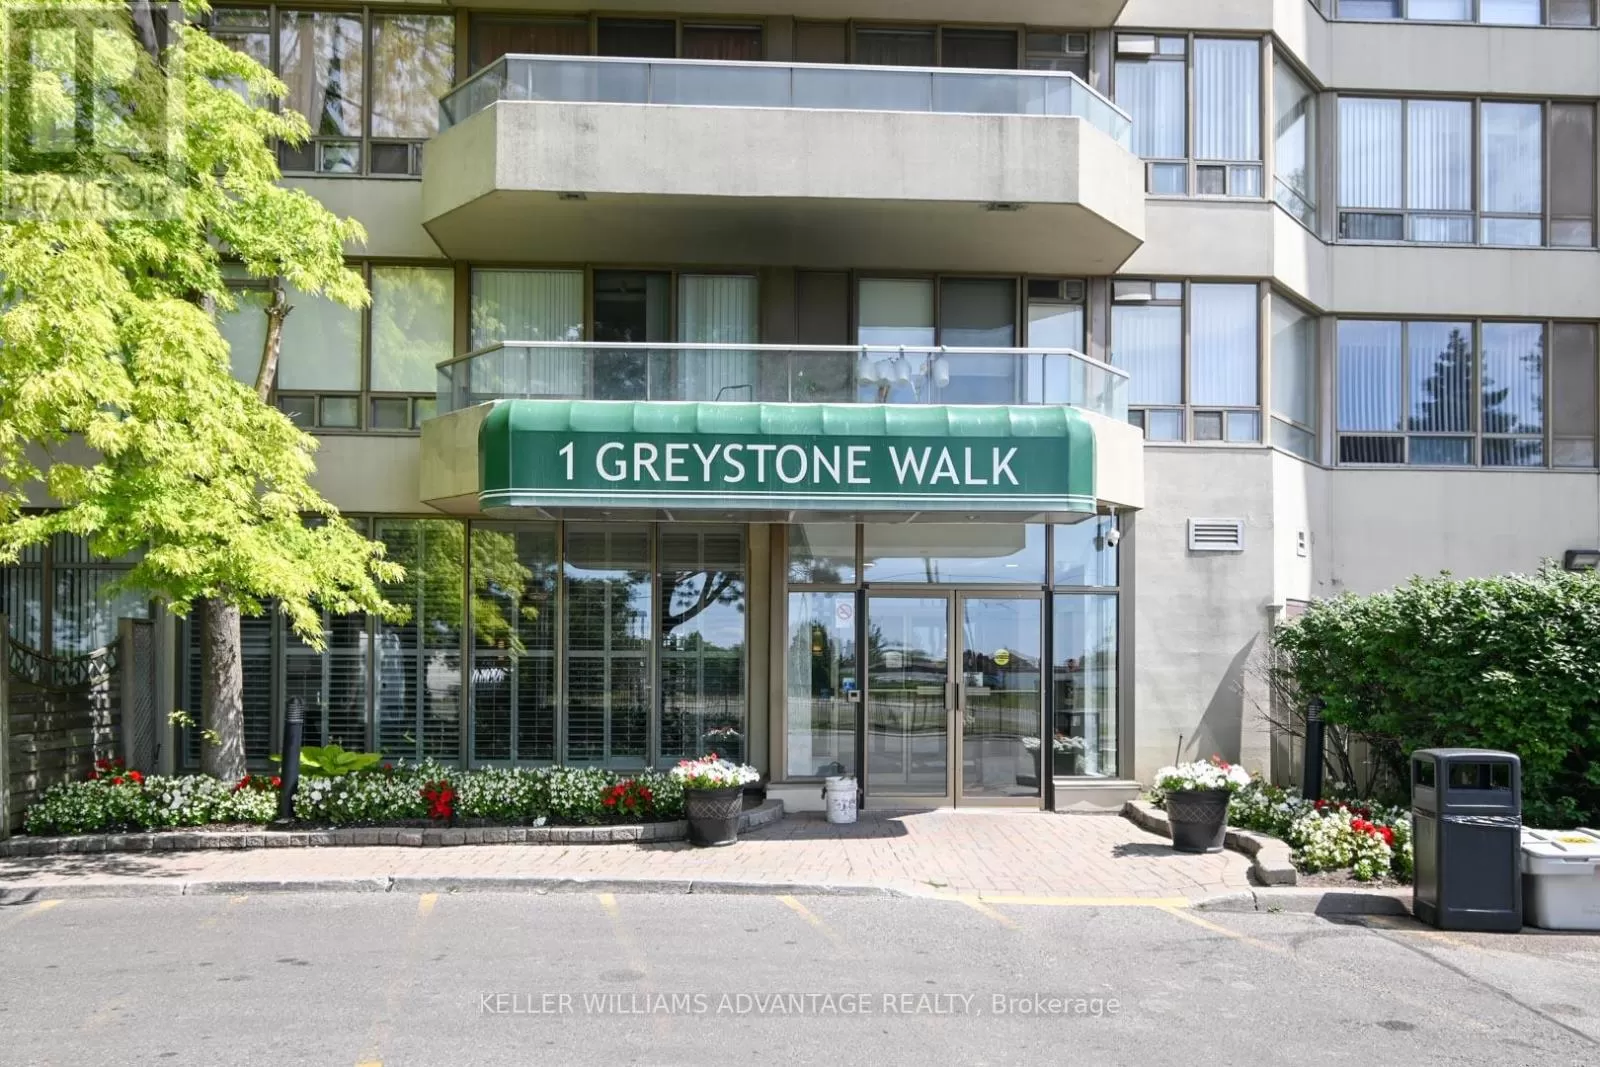 Apartment for rent: 1686 - 1 Greystone Walk Drive, Toronto, Ontario M1K 5J3